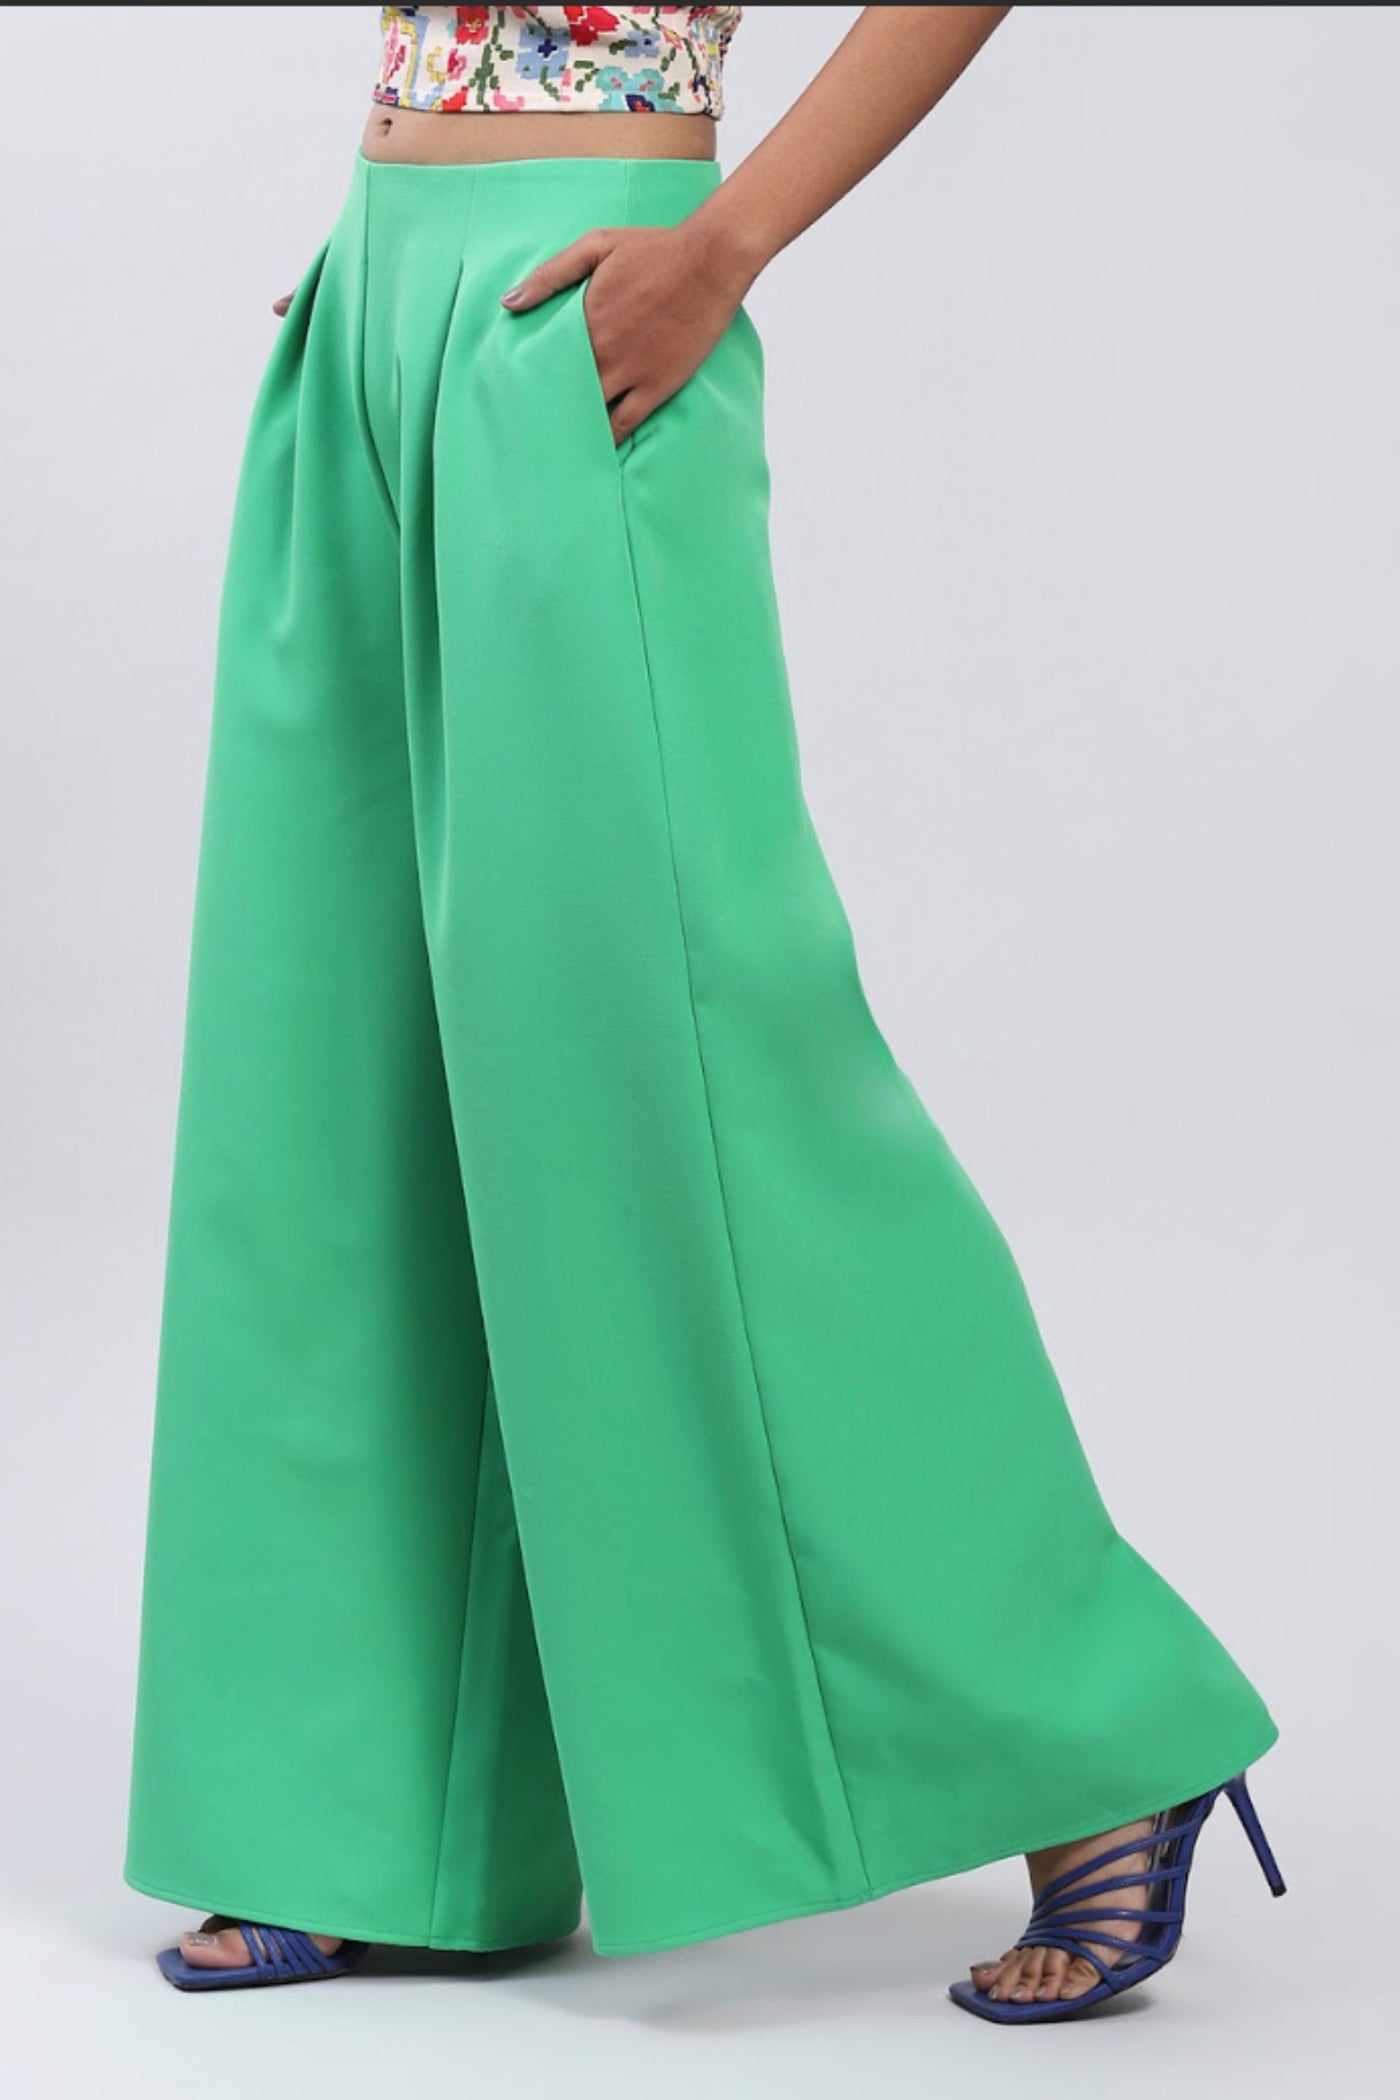 Label Ritu Kumar Green Wide-Leg Pants Indian designer wear online shopping melange singapore